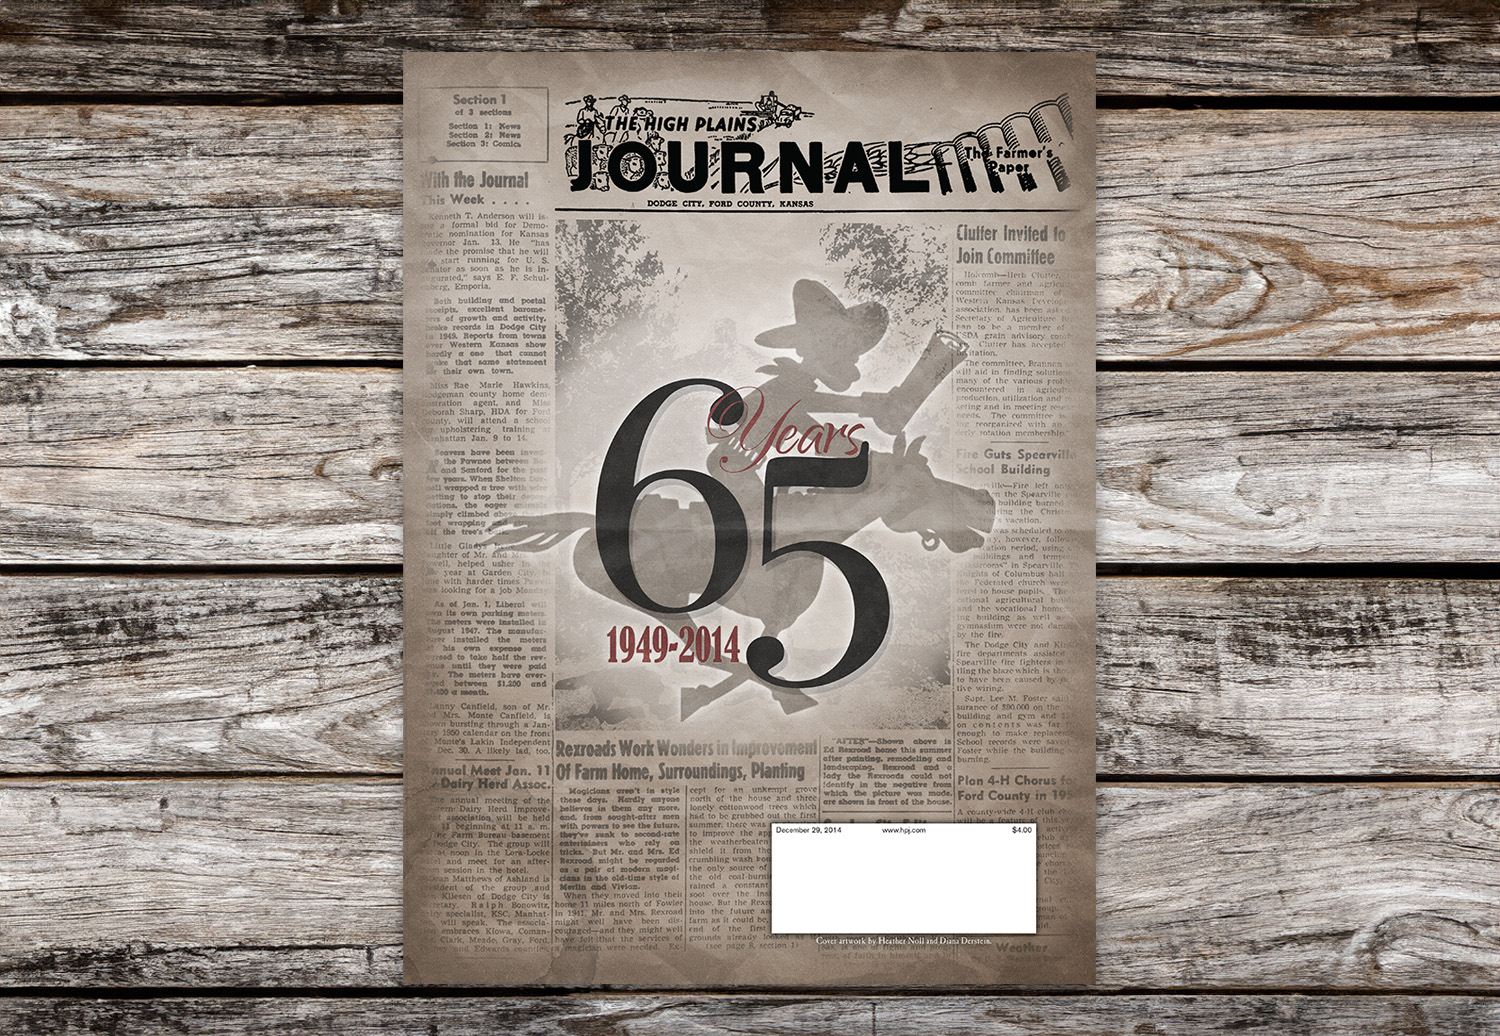 High Plains Journal 65th Anniversary cover